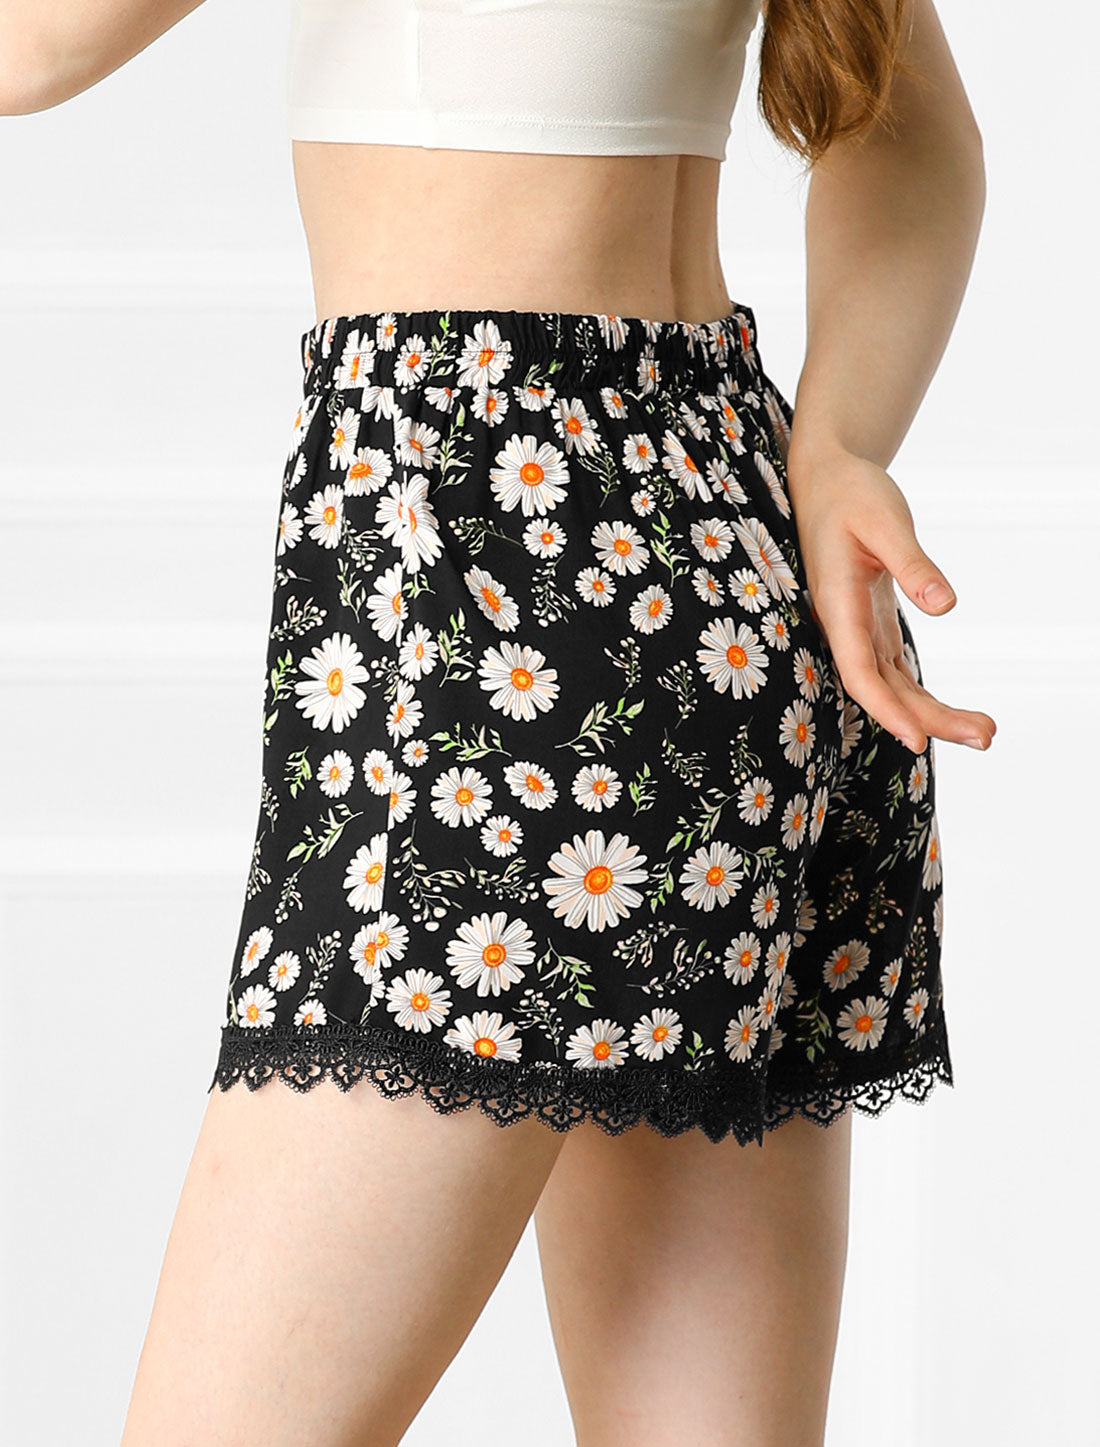 Allegra K Women's Summer Shorts Floral Printed Lace Trim Elastic Waist Beach Shorts